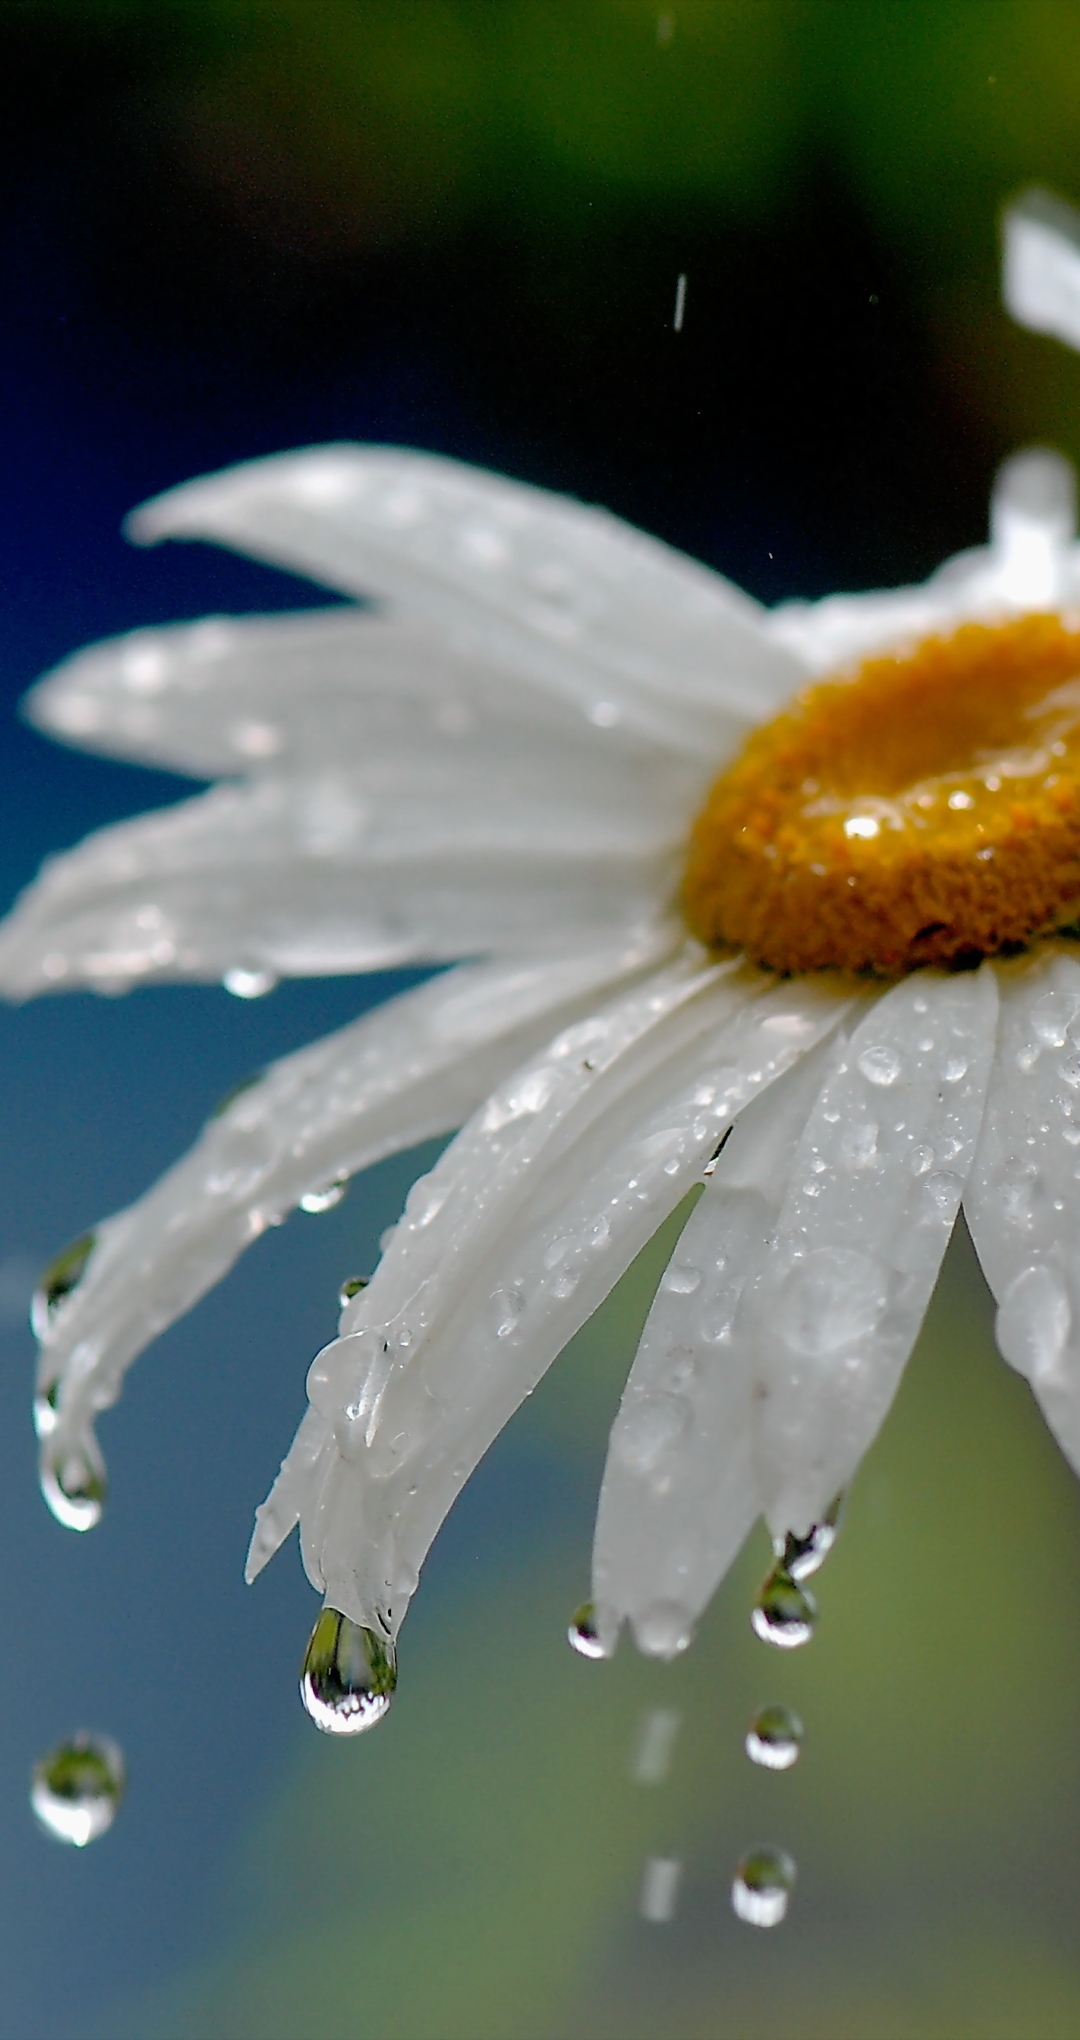 Картинка: Ромашка, капли, лепестки, дождь, вода, цветок